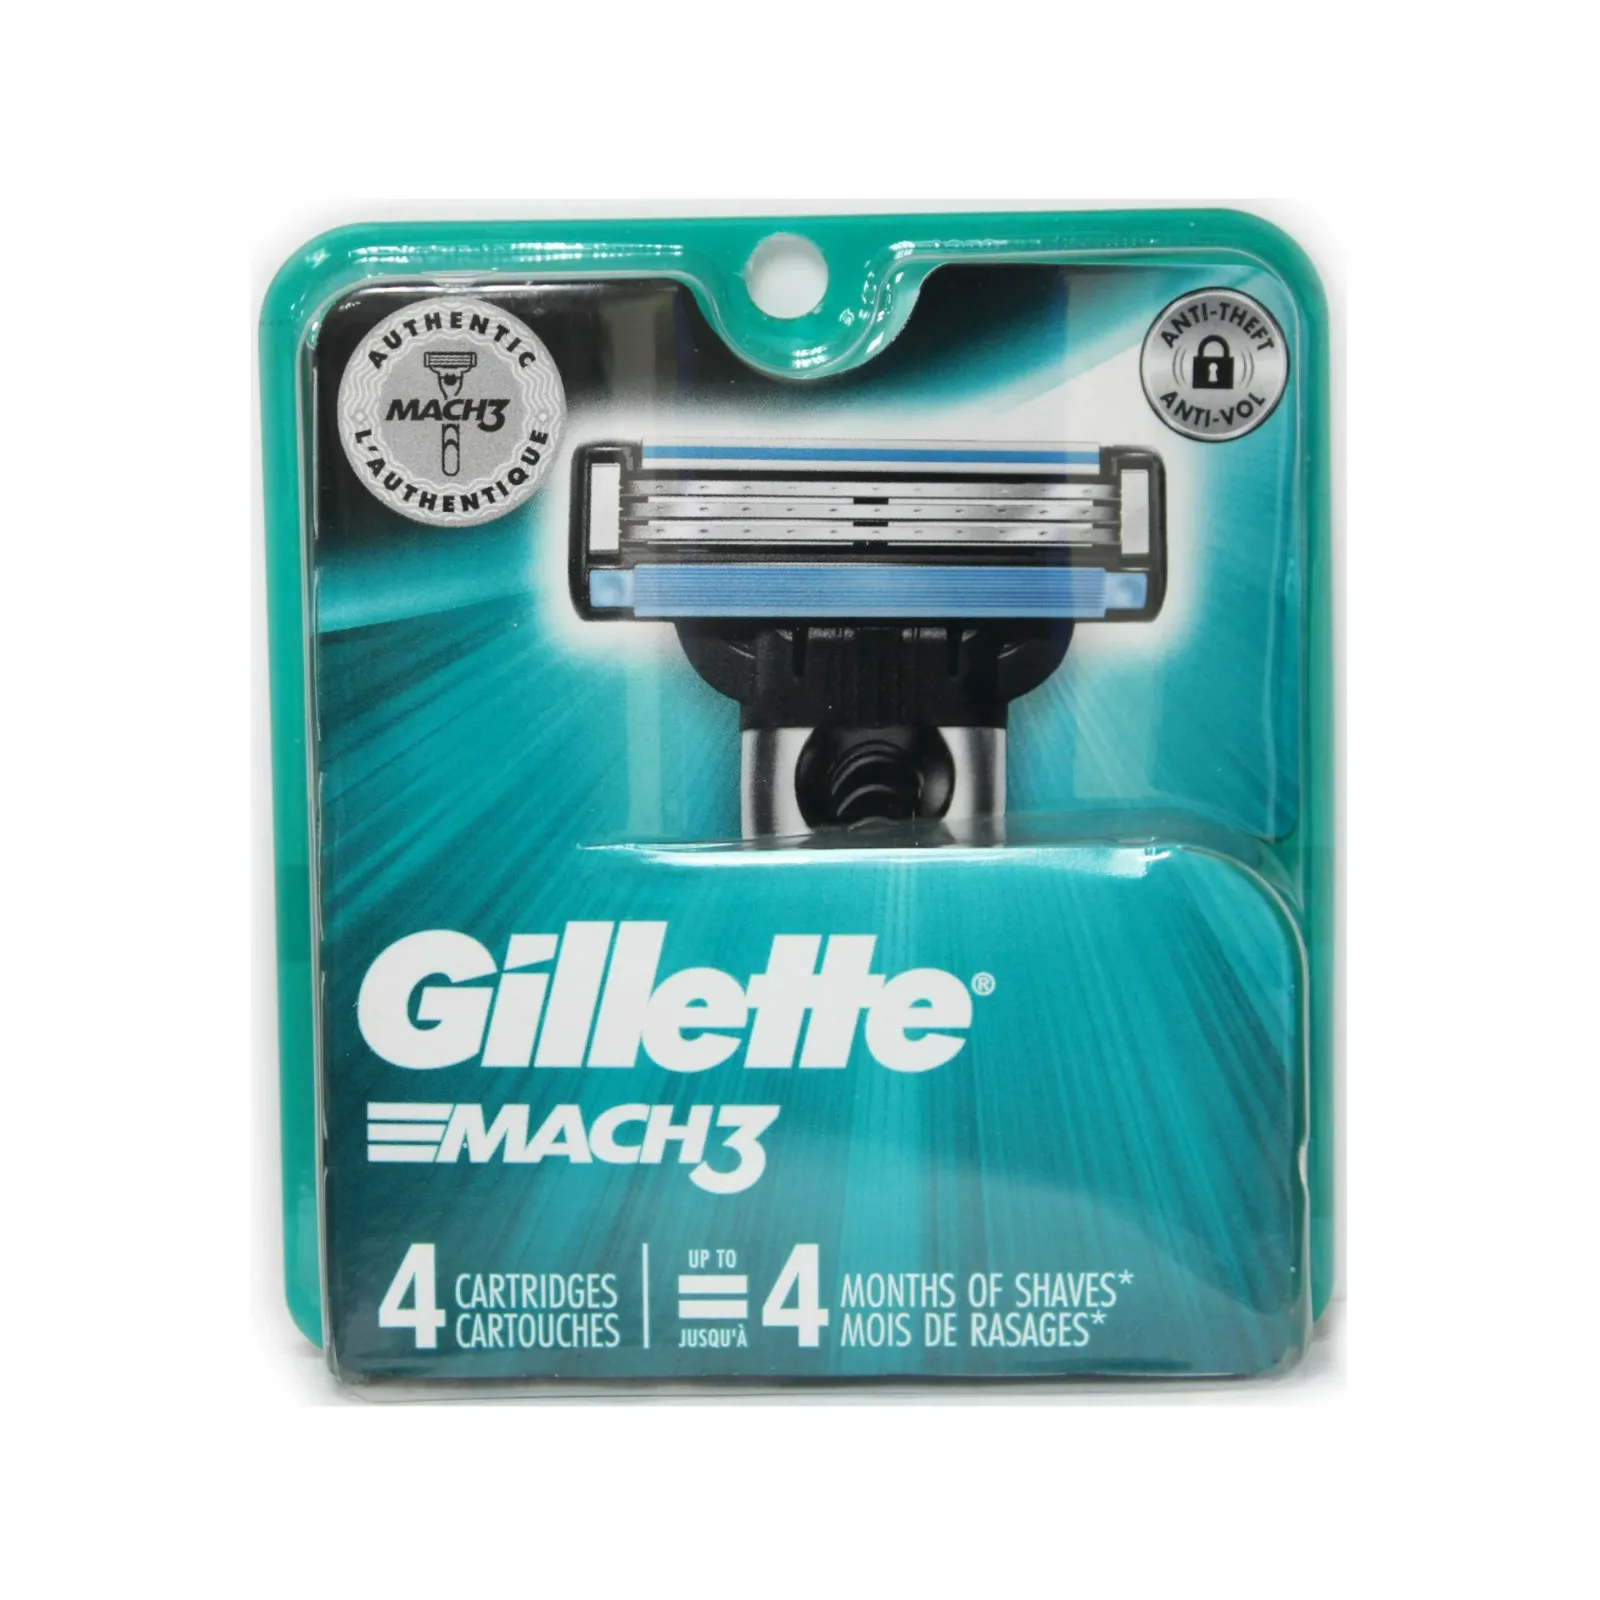 Gillette Mach3 Refill Cartridges,4 Count - Buy Gillette Venos Gillette ...